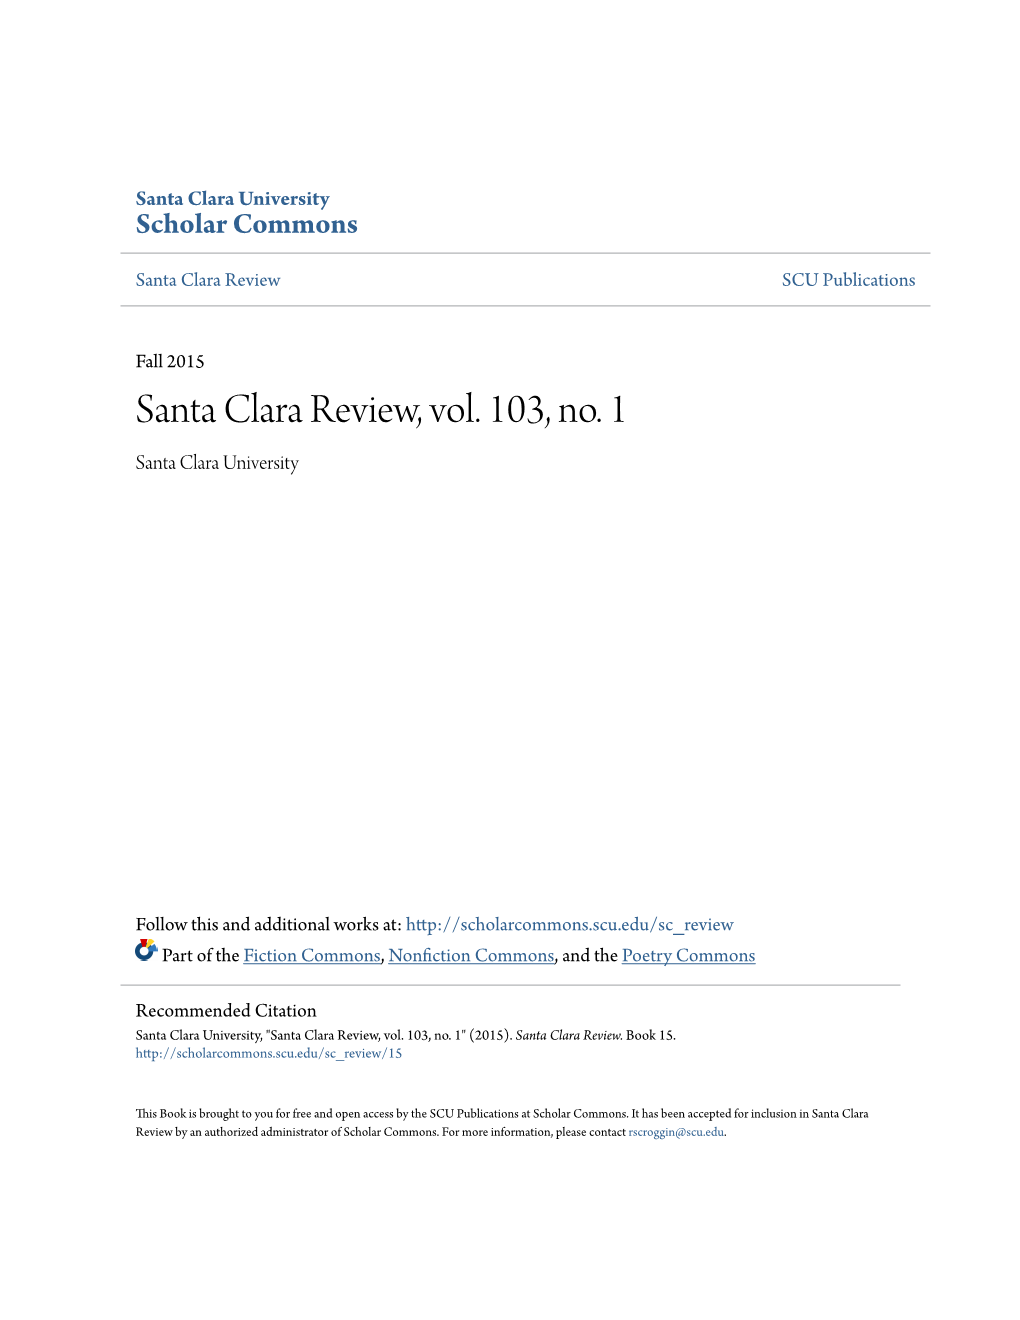 Santa Clara Review, Vol. 103, No. 1 Santa Clara University